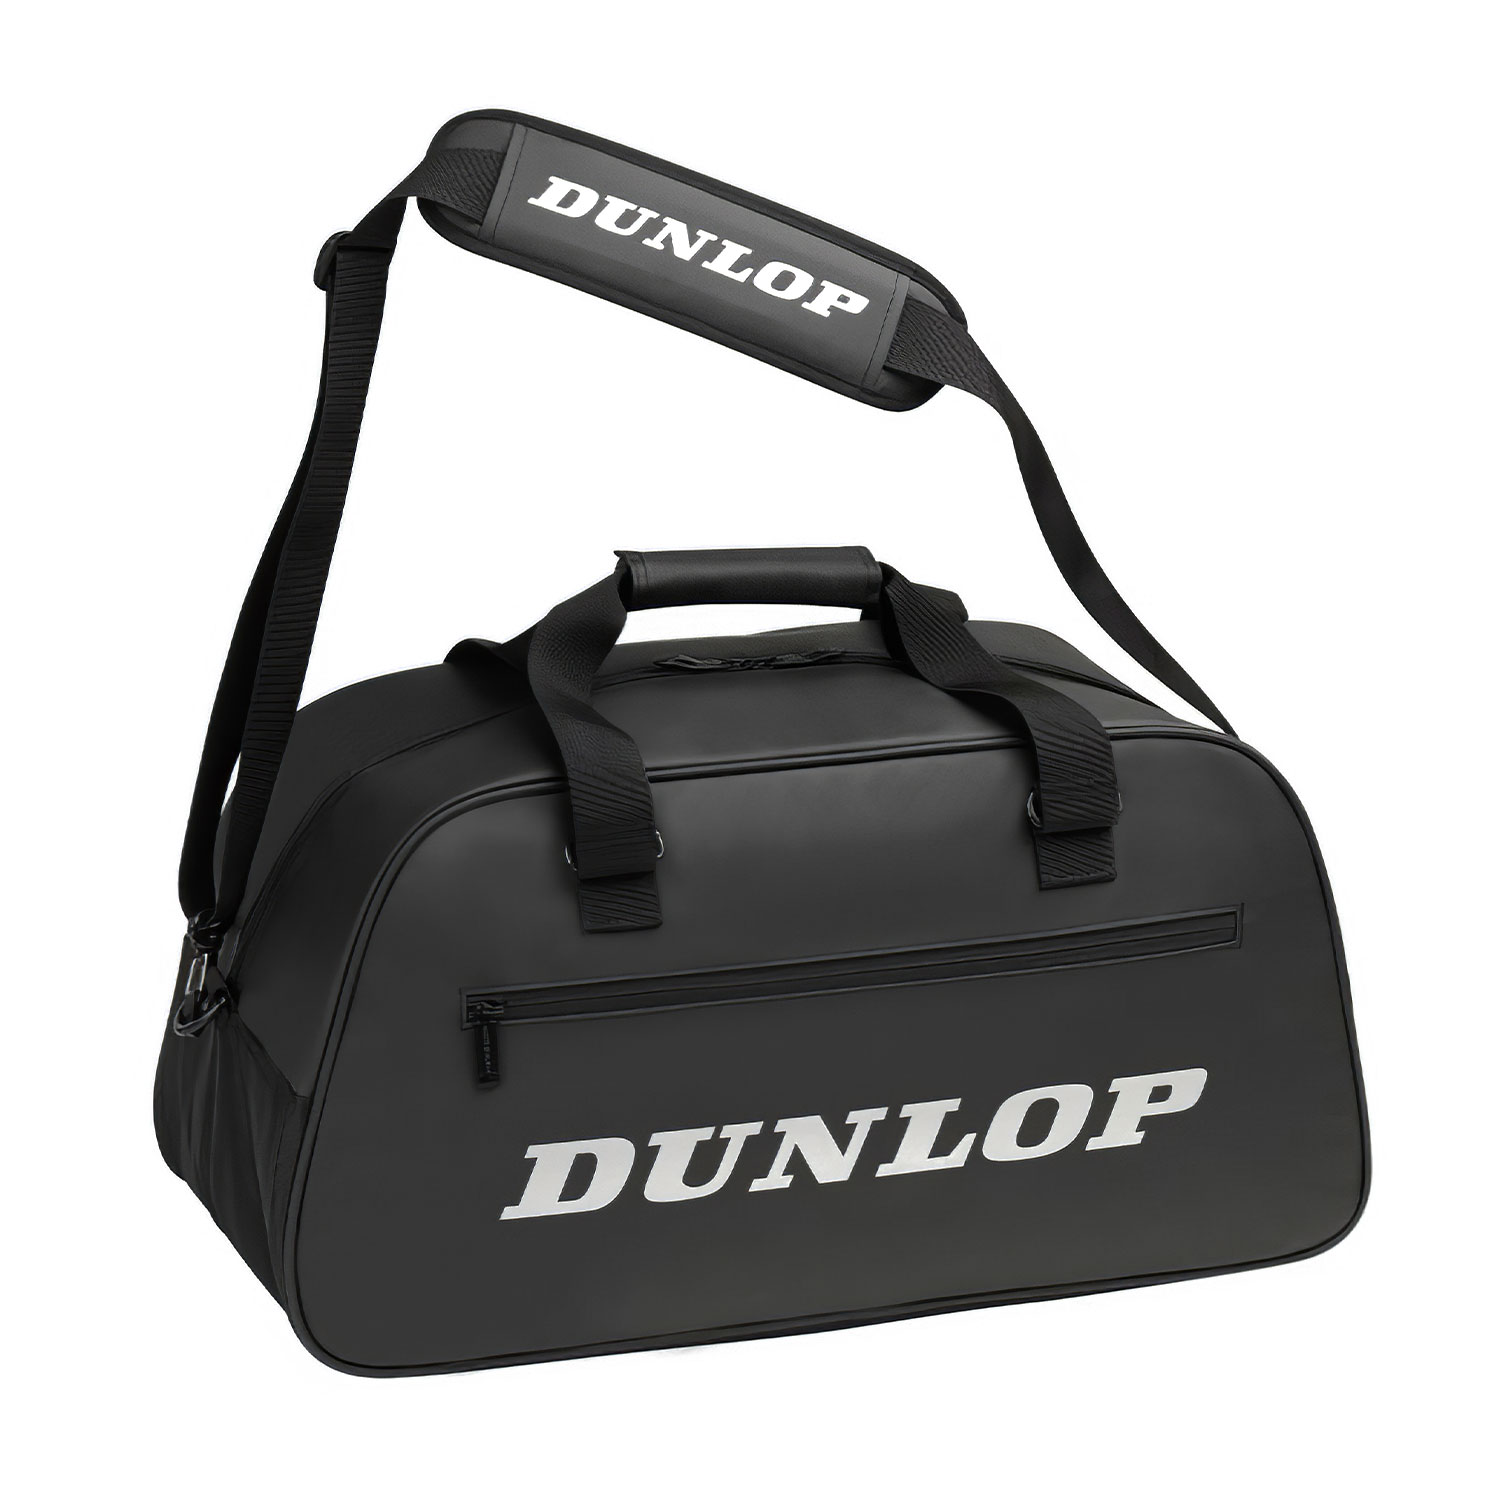 Dunlop Pro Bolsas - Black